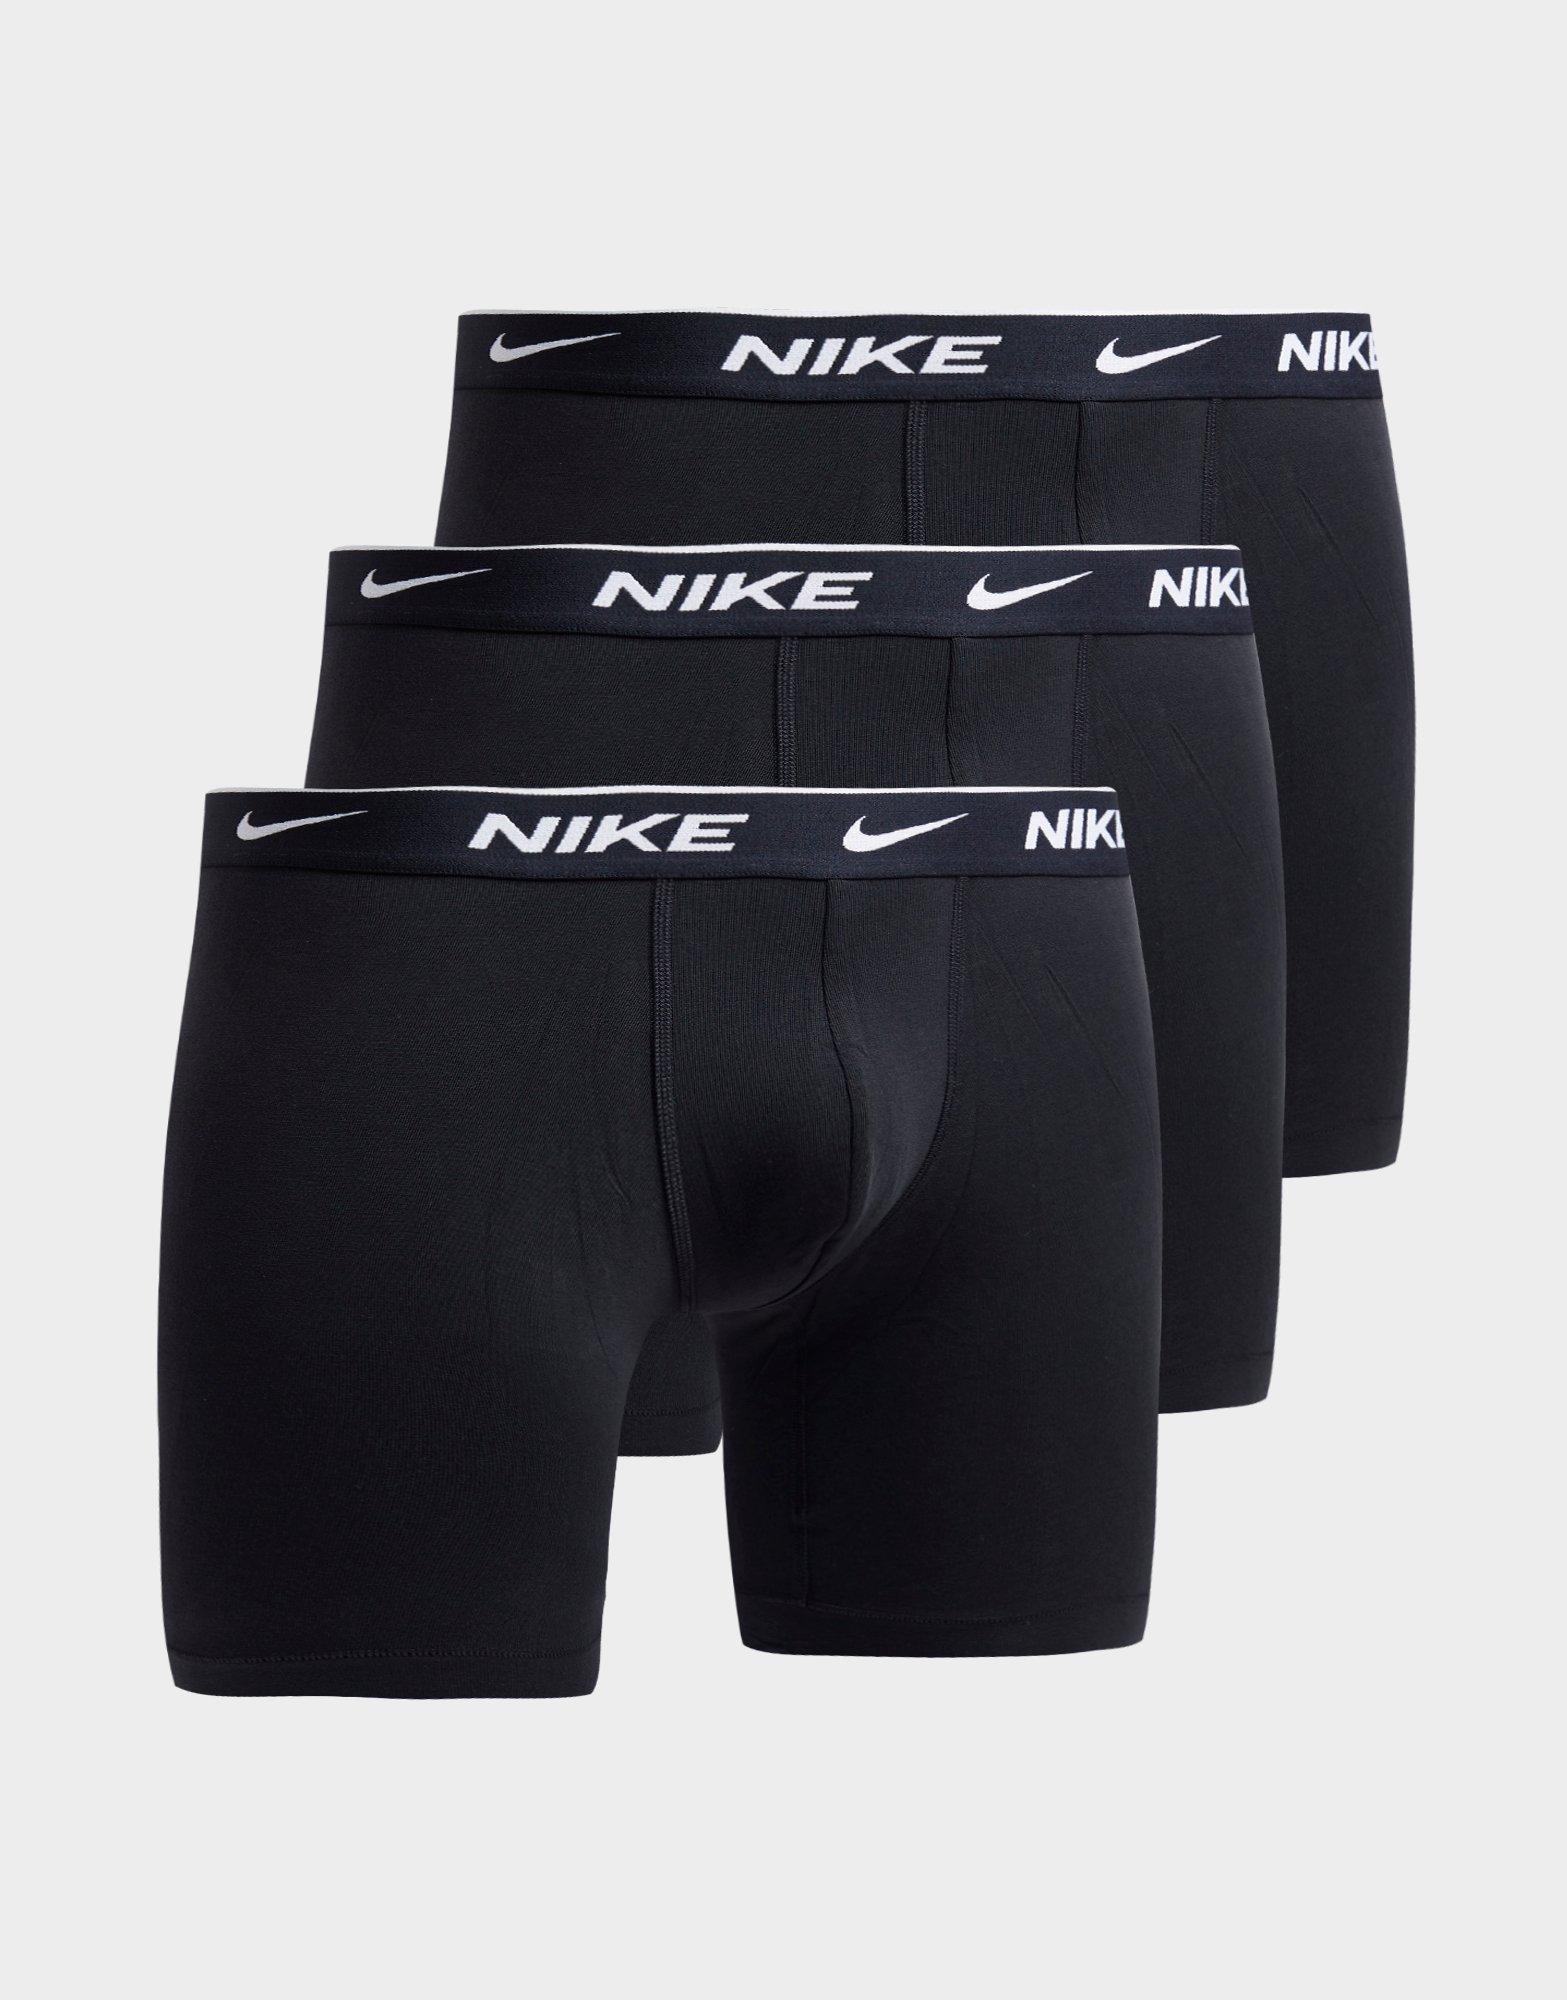 nike boxers long